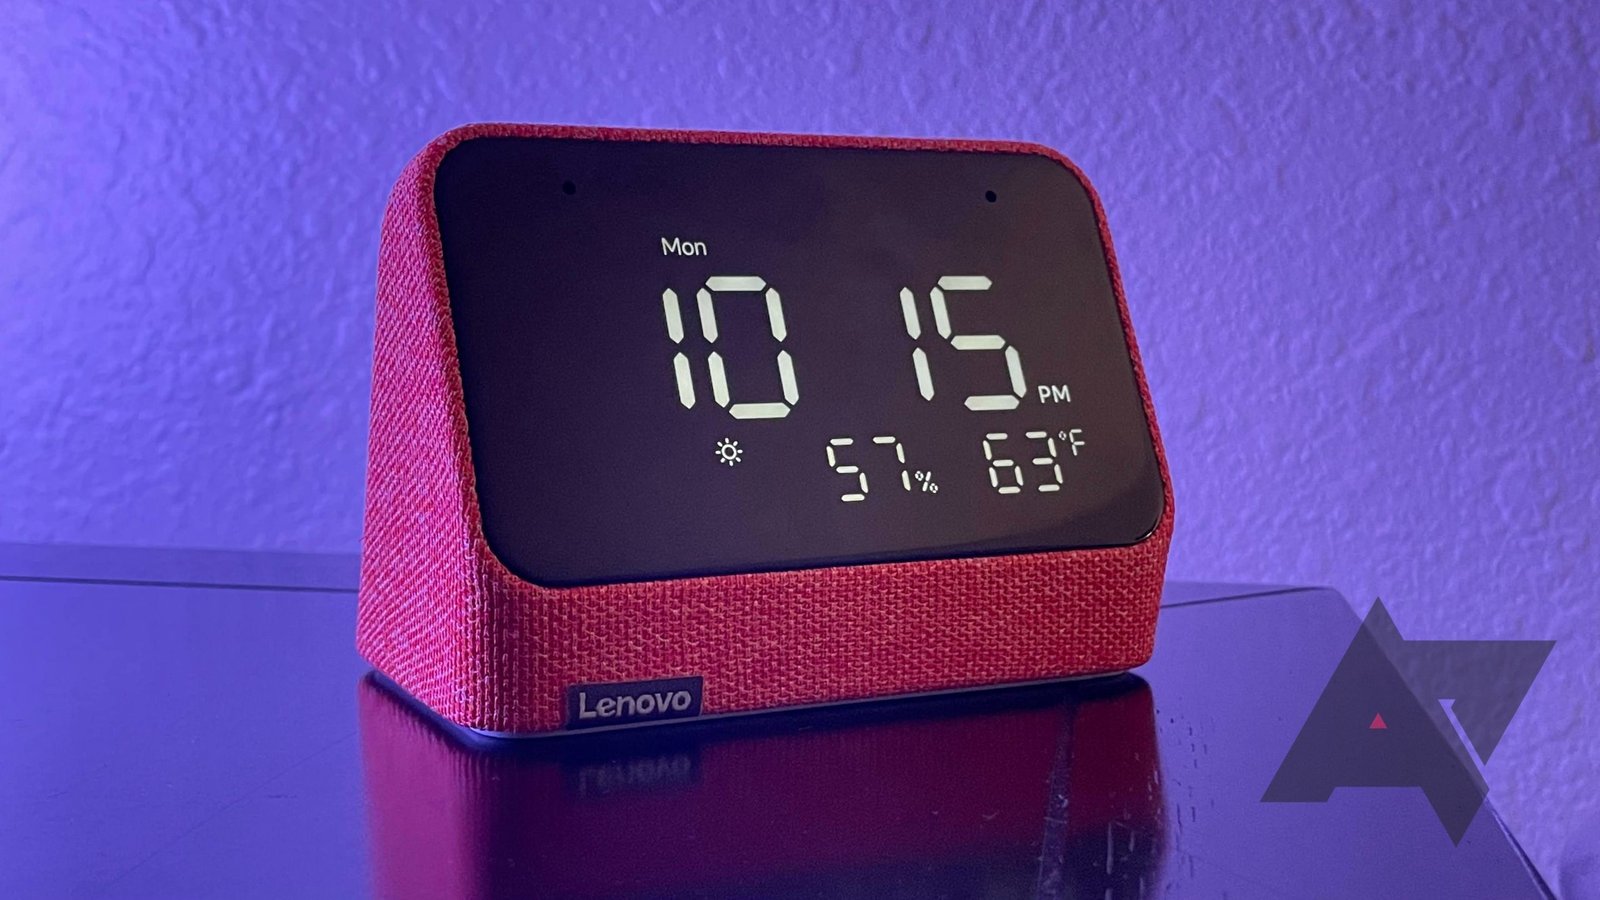 Lenovo-smart-clock-essential-front-scaled.jpg